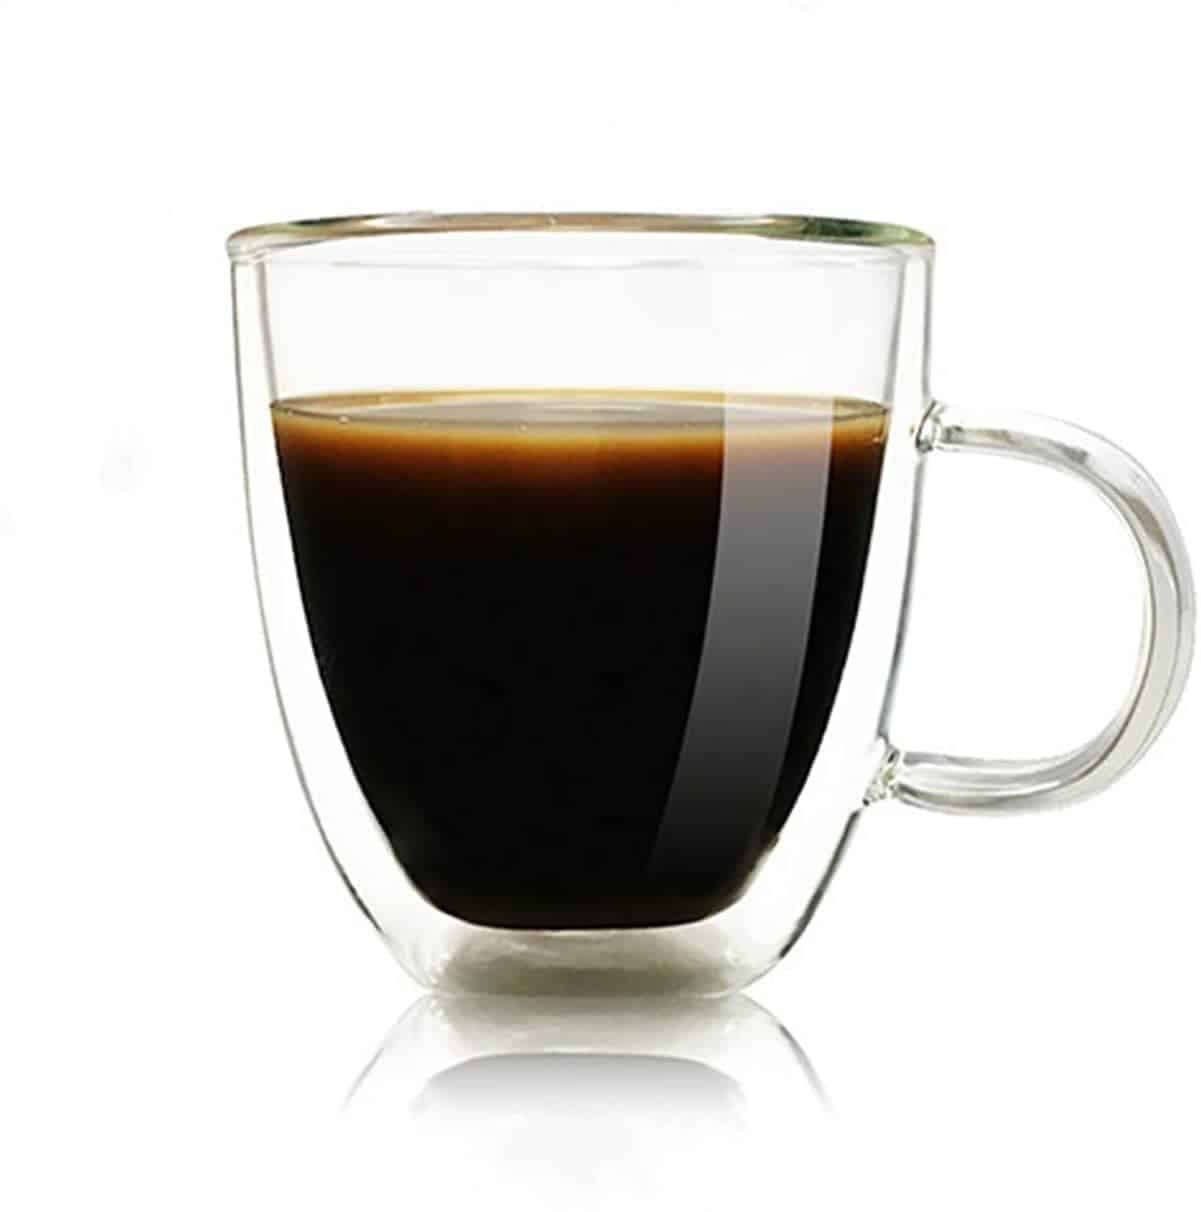 https://slyprc.com/wp-content/uploads/2022/05/wholesale-glass-coffee-mugs-3-1.jpg